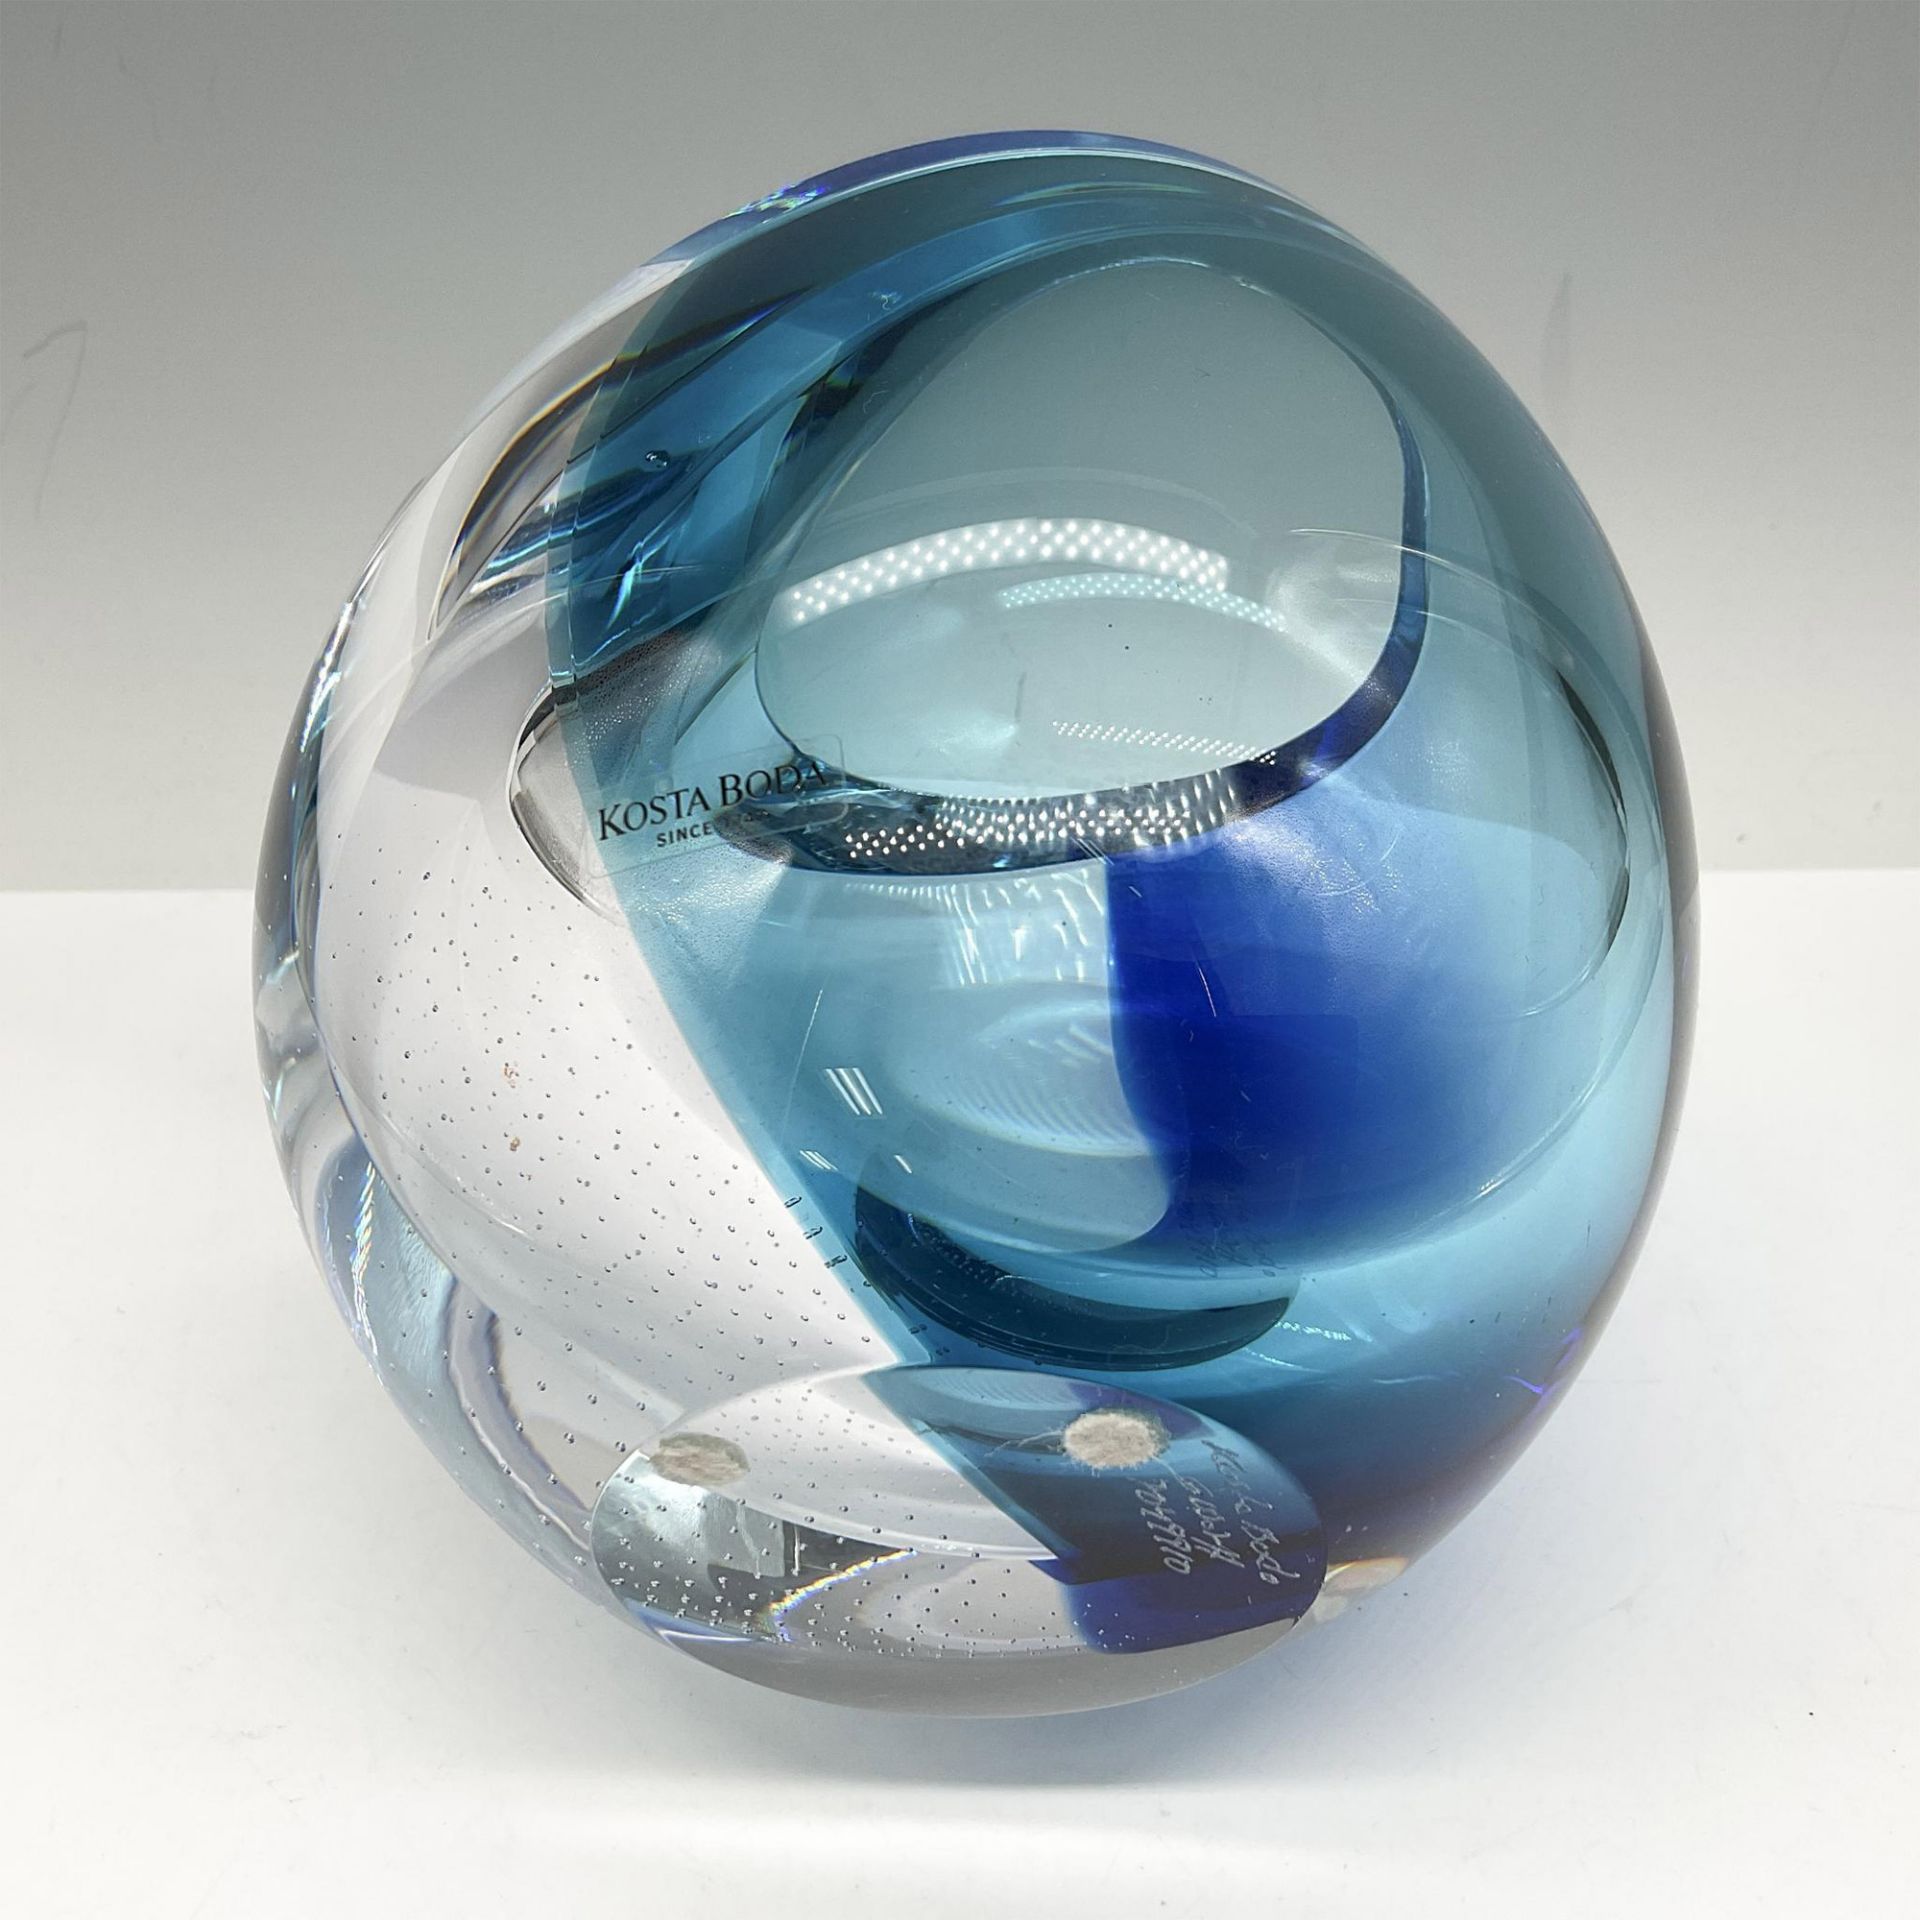 Kosta Boda Blue Glass Bowl - Image 4 of 4